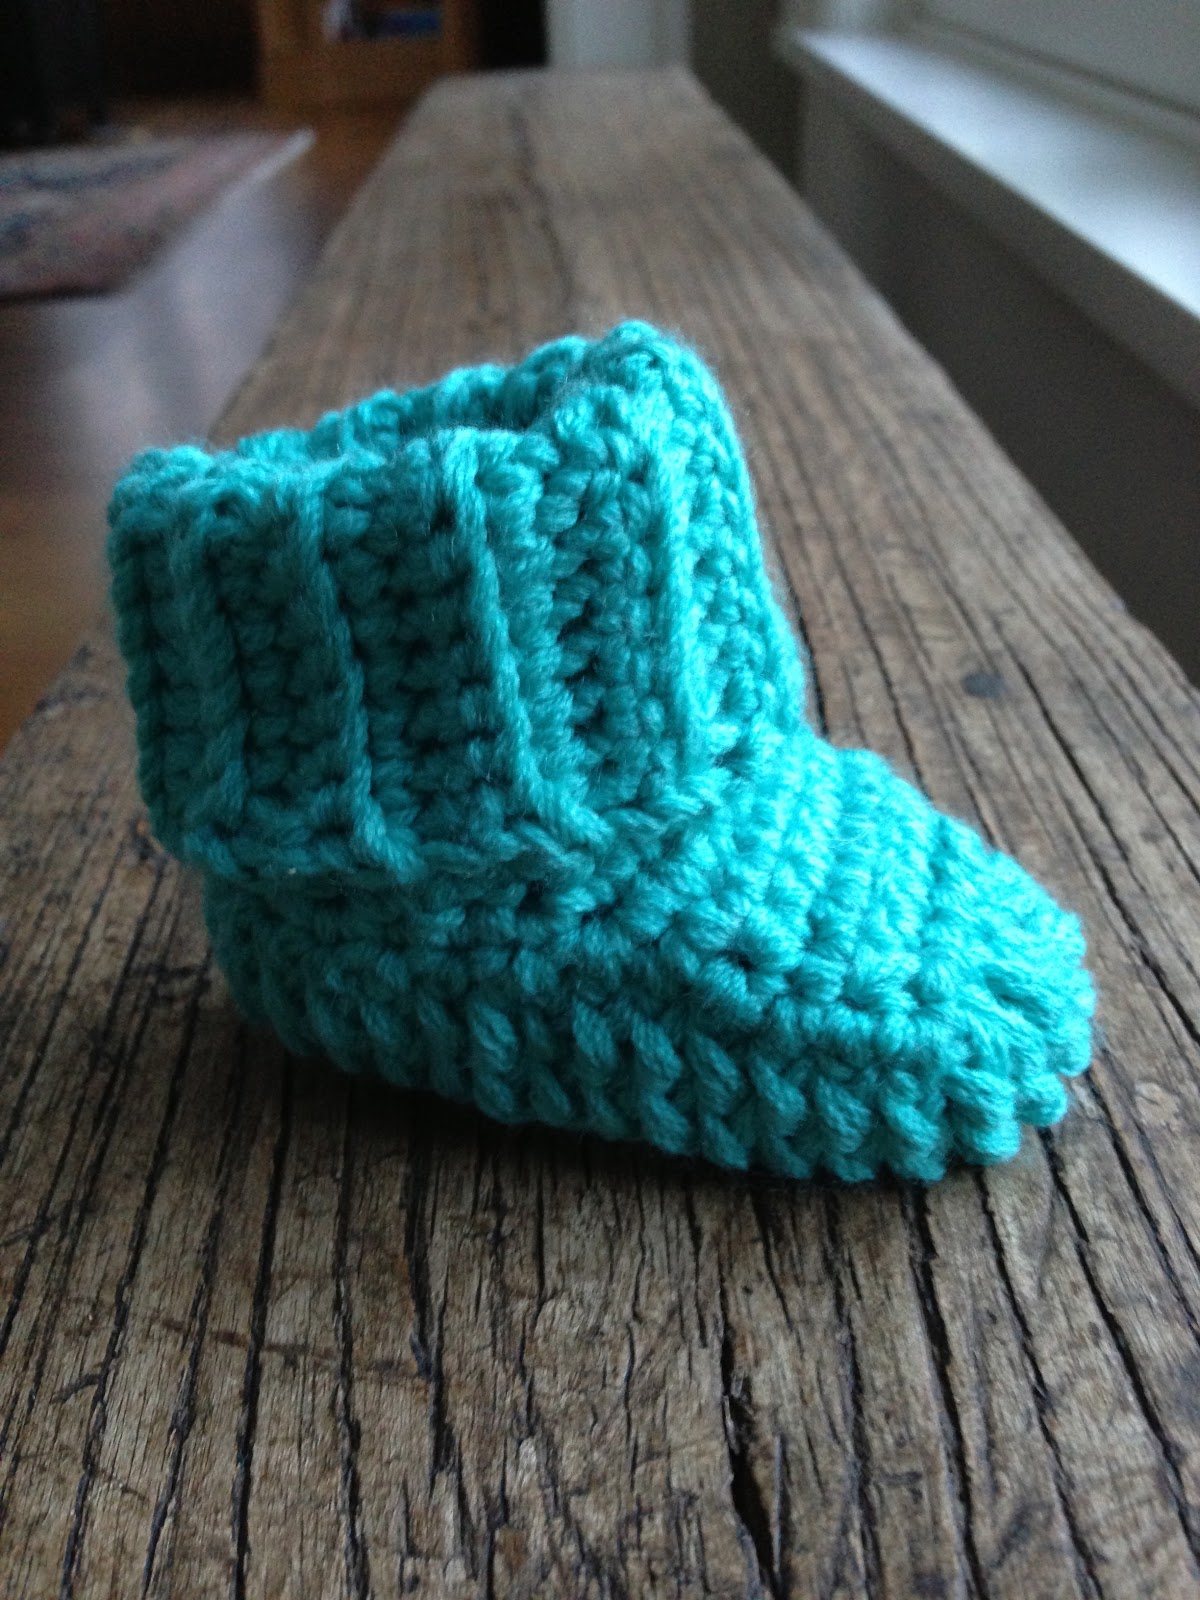 Annoo's Crochet World: Spring Flower Baby Booties Free Pattern